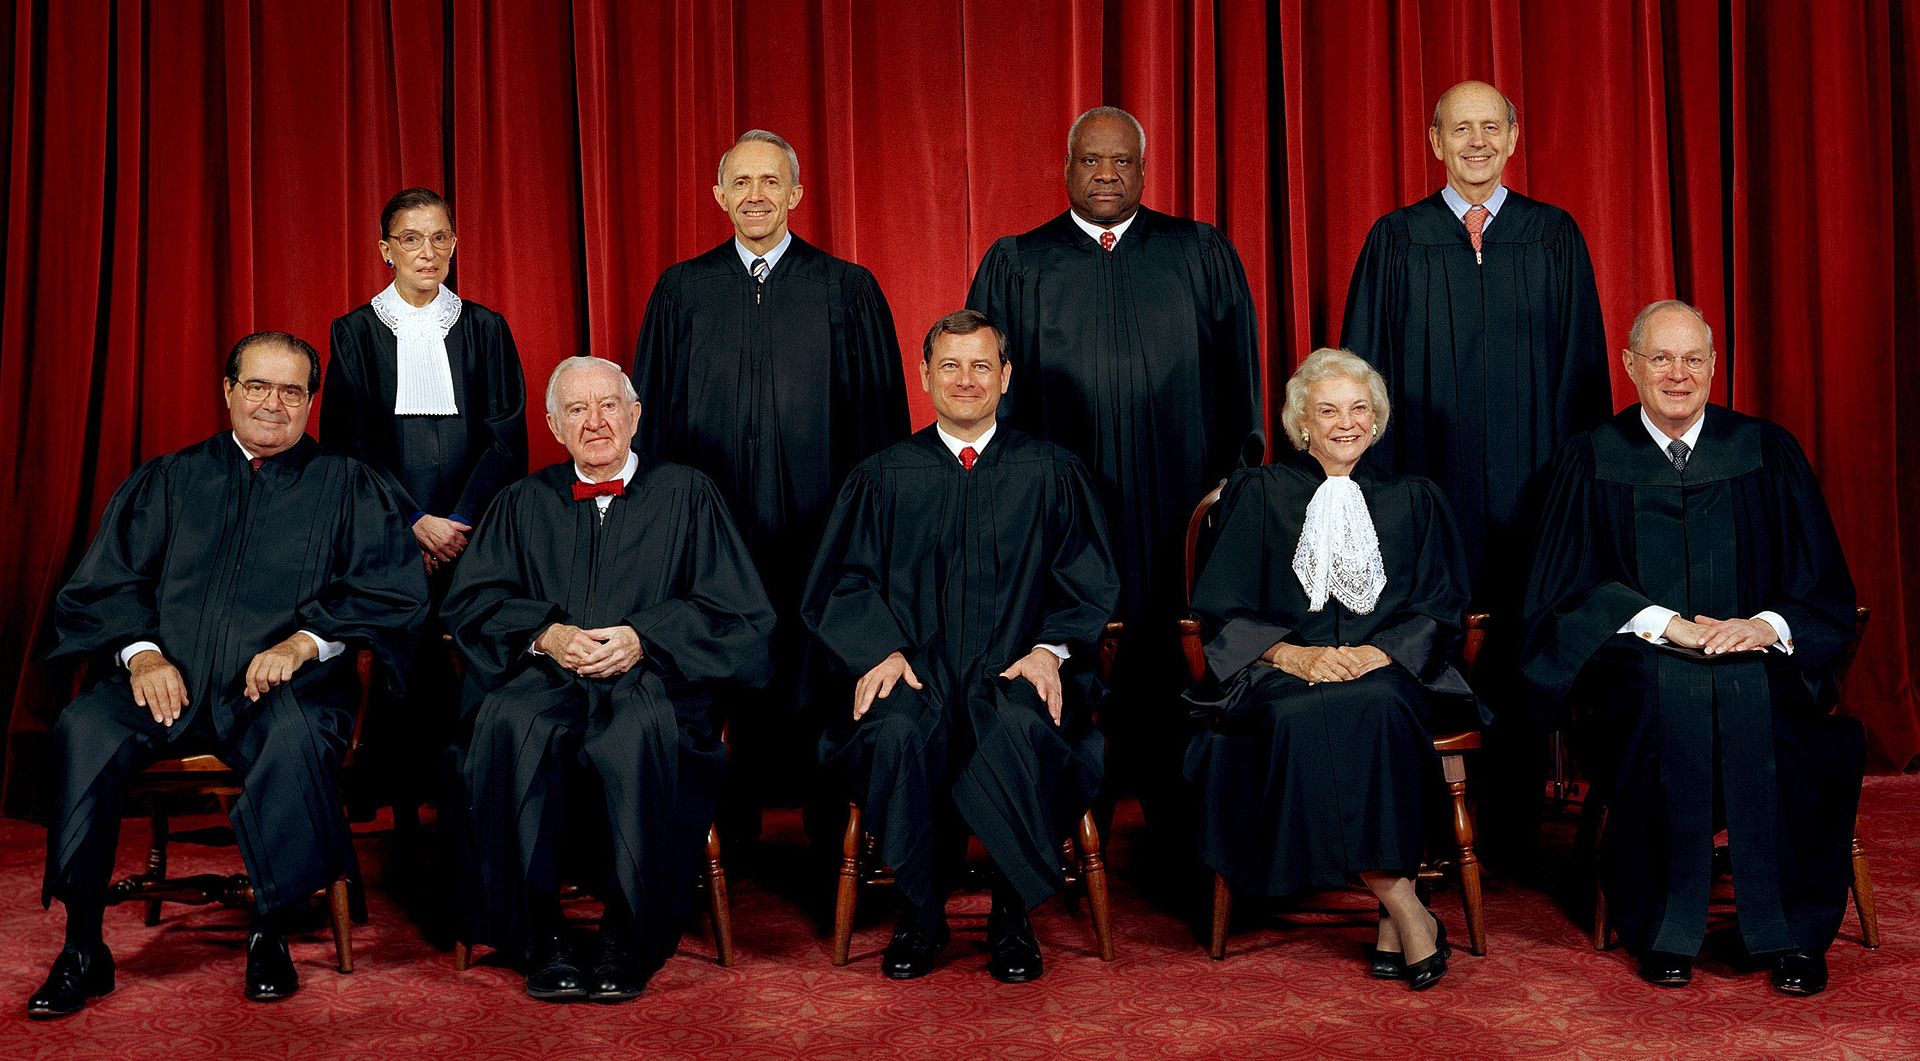 The 2005 Supreme Court Group Picture [Public domain], via Wikimedia Commons